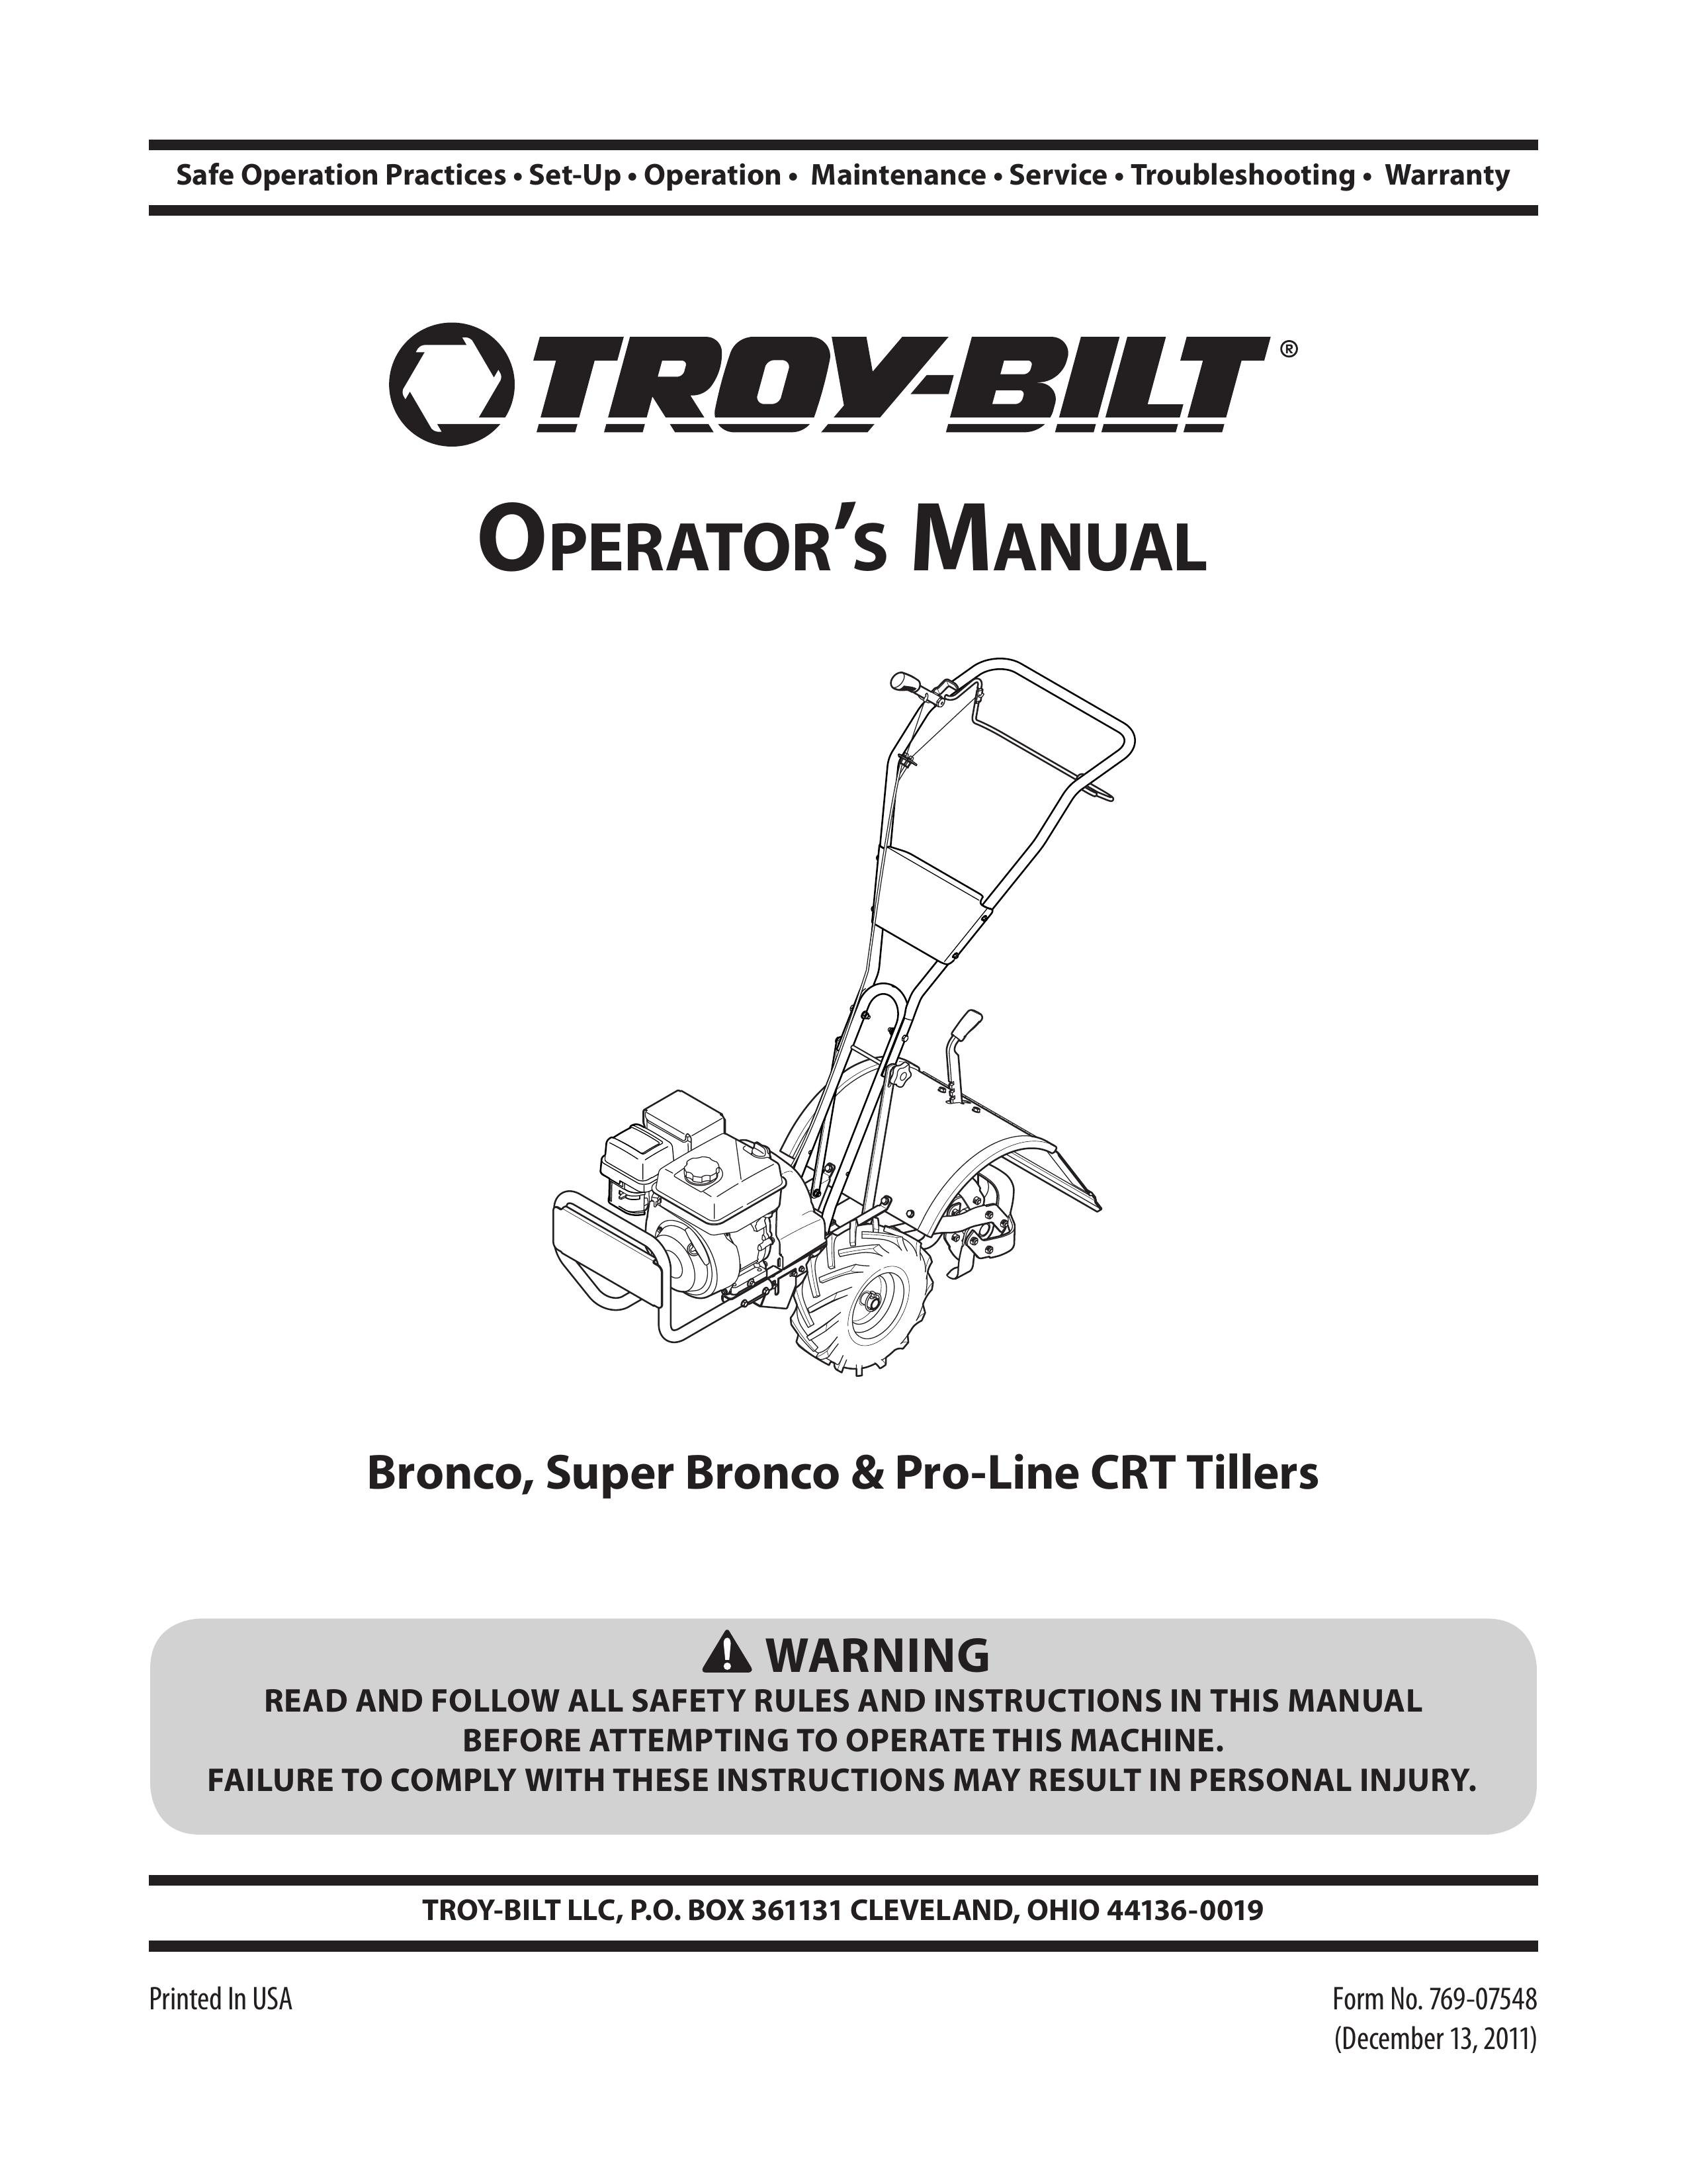 Troy-Bilt 769-07548 Lawn Mower Accessory User Manual